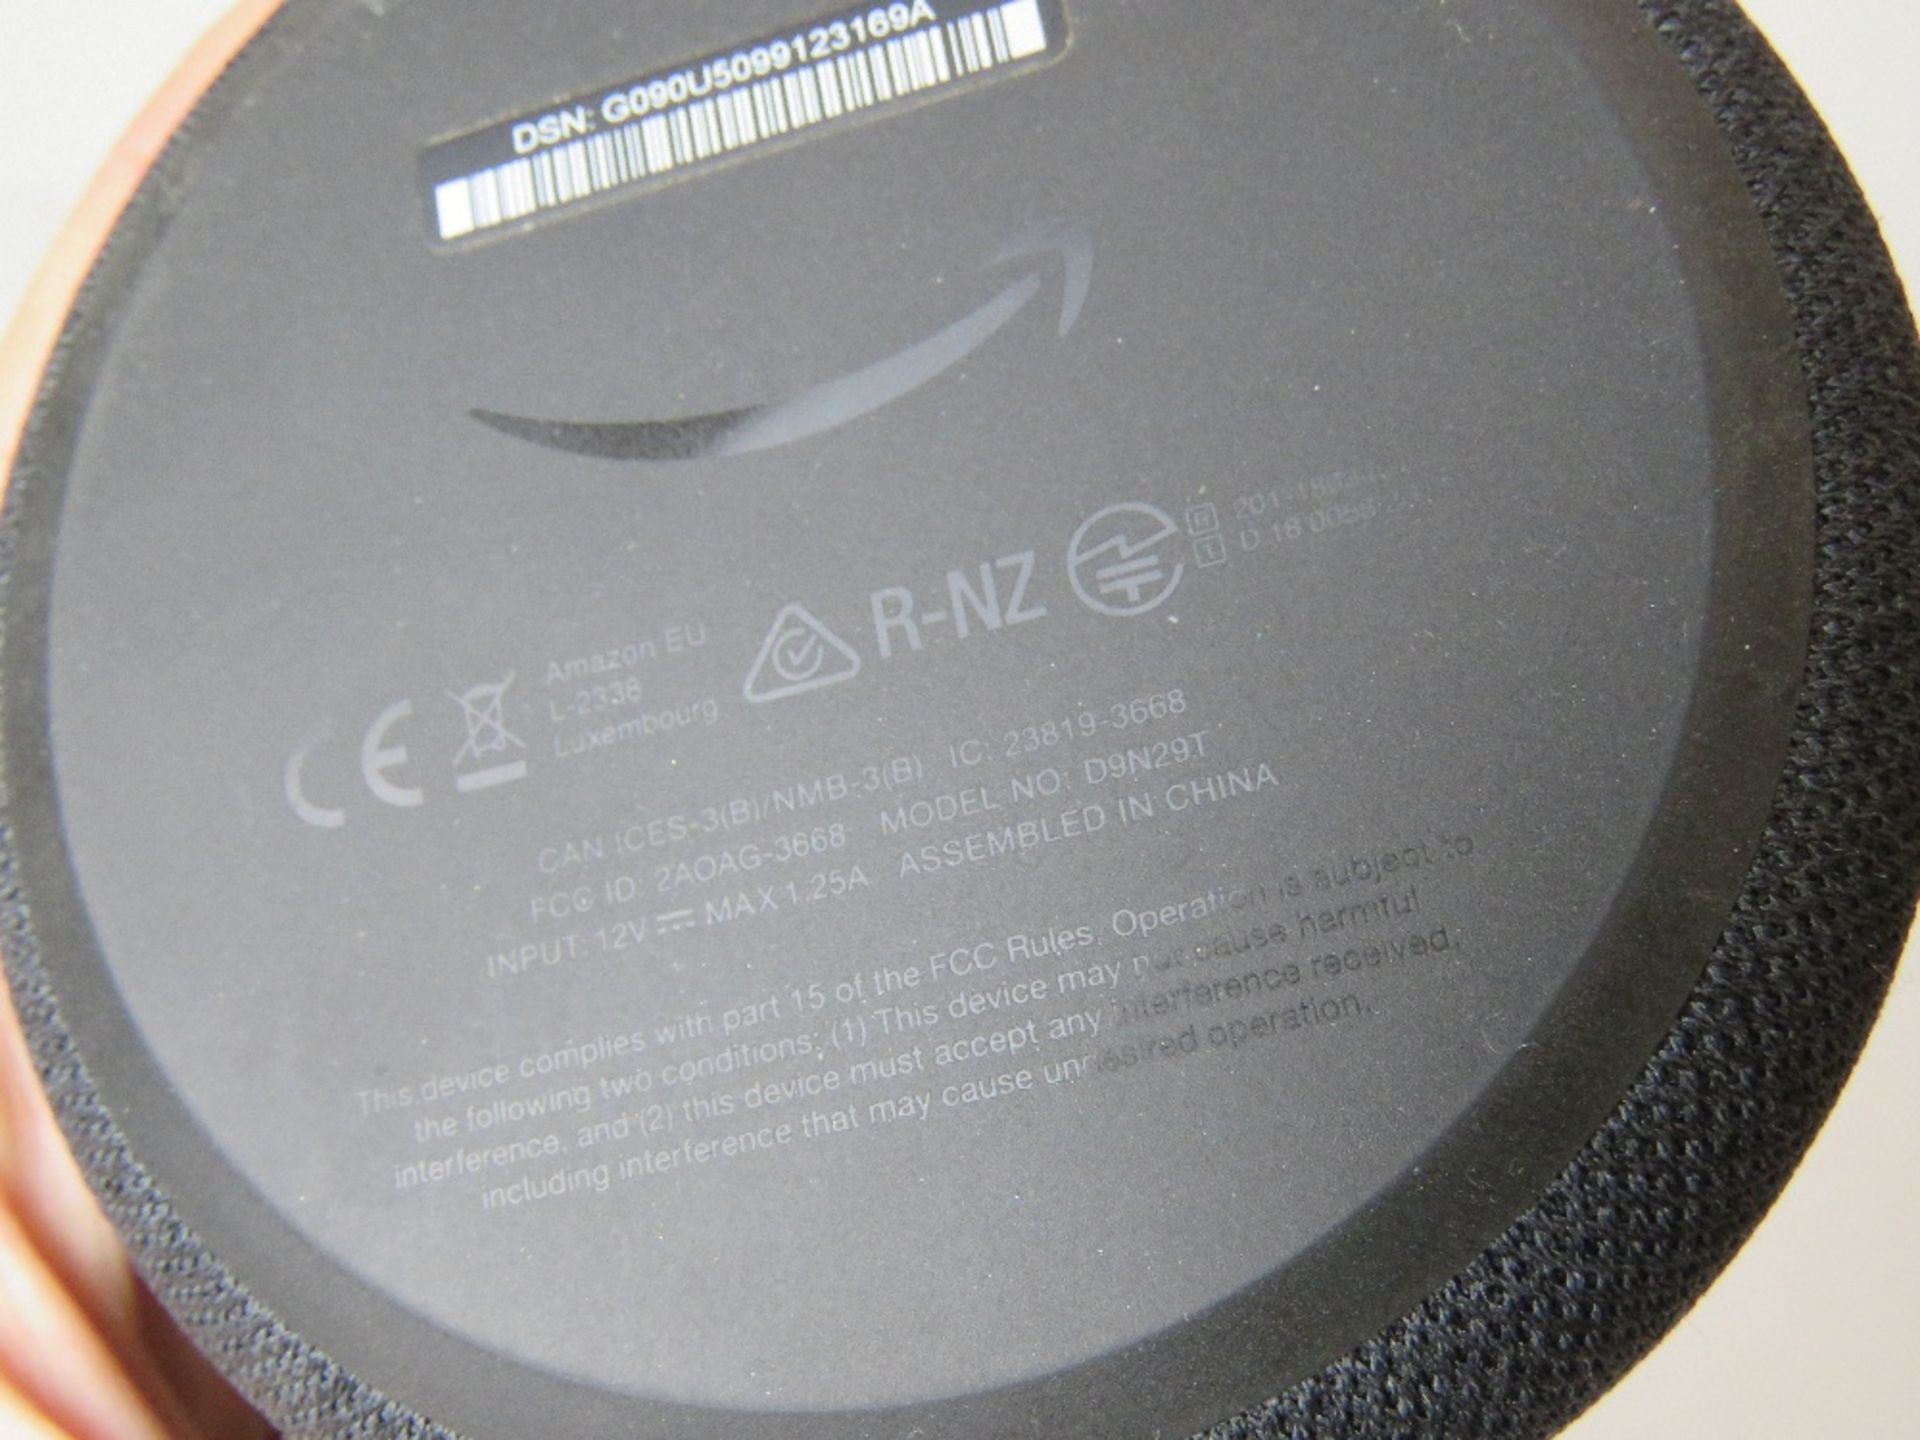 An Amazon Echo Dot, no cable. - Image 2 of 2